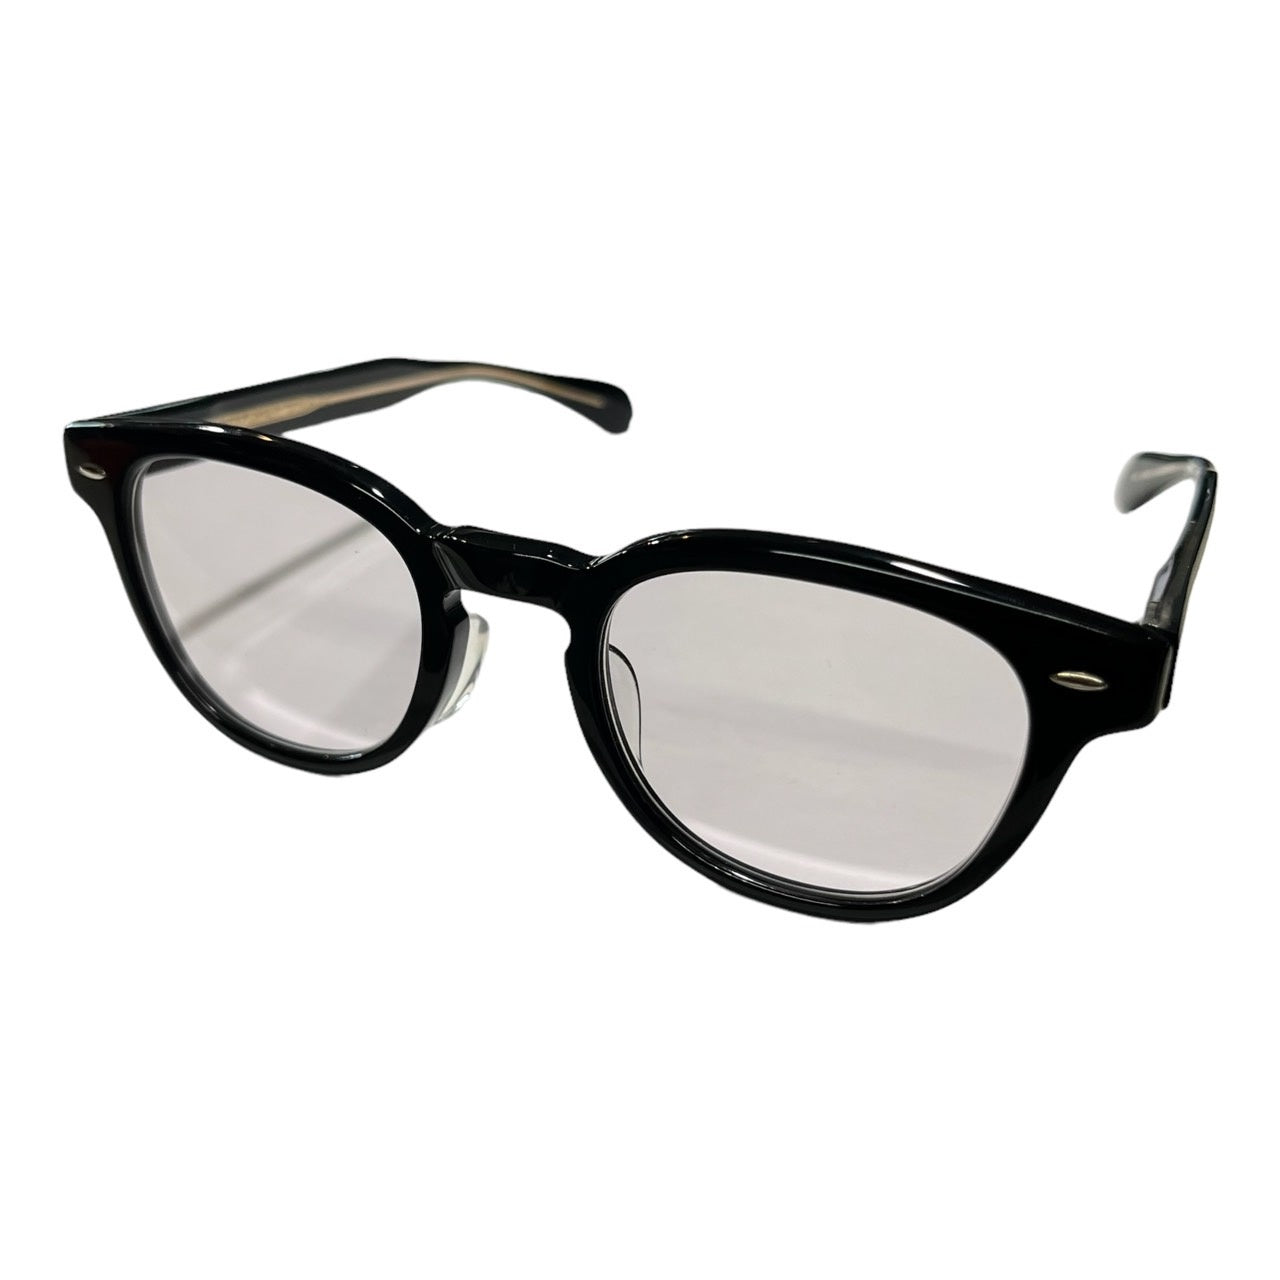 OLIVER PEOPLES(オリバーピープルズ) Sheldrake-J ウェリントン サングラス 47□22-140 ブラック 眼鏡 メガネ